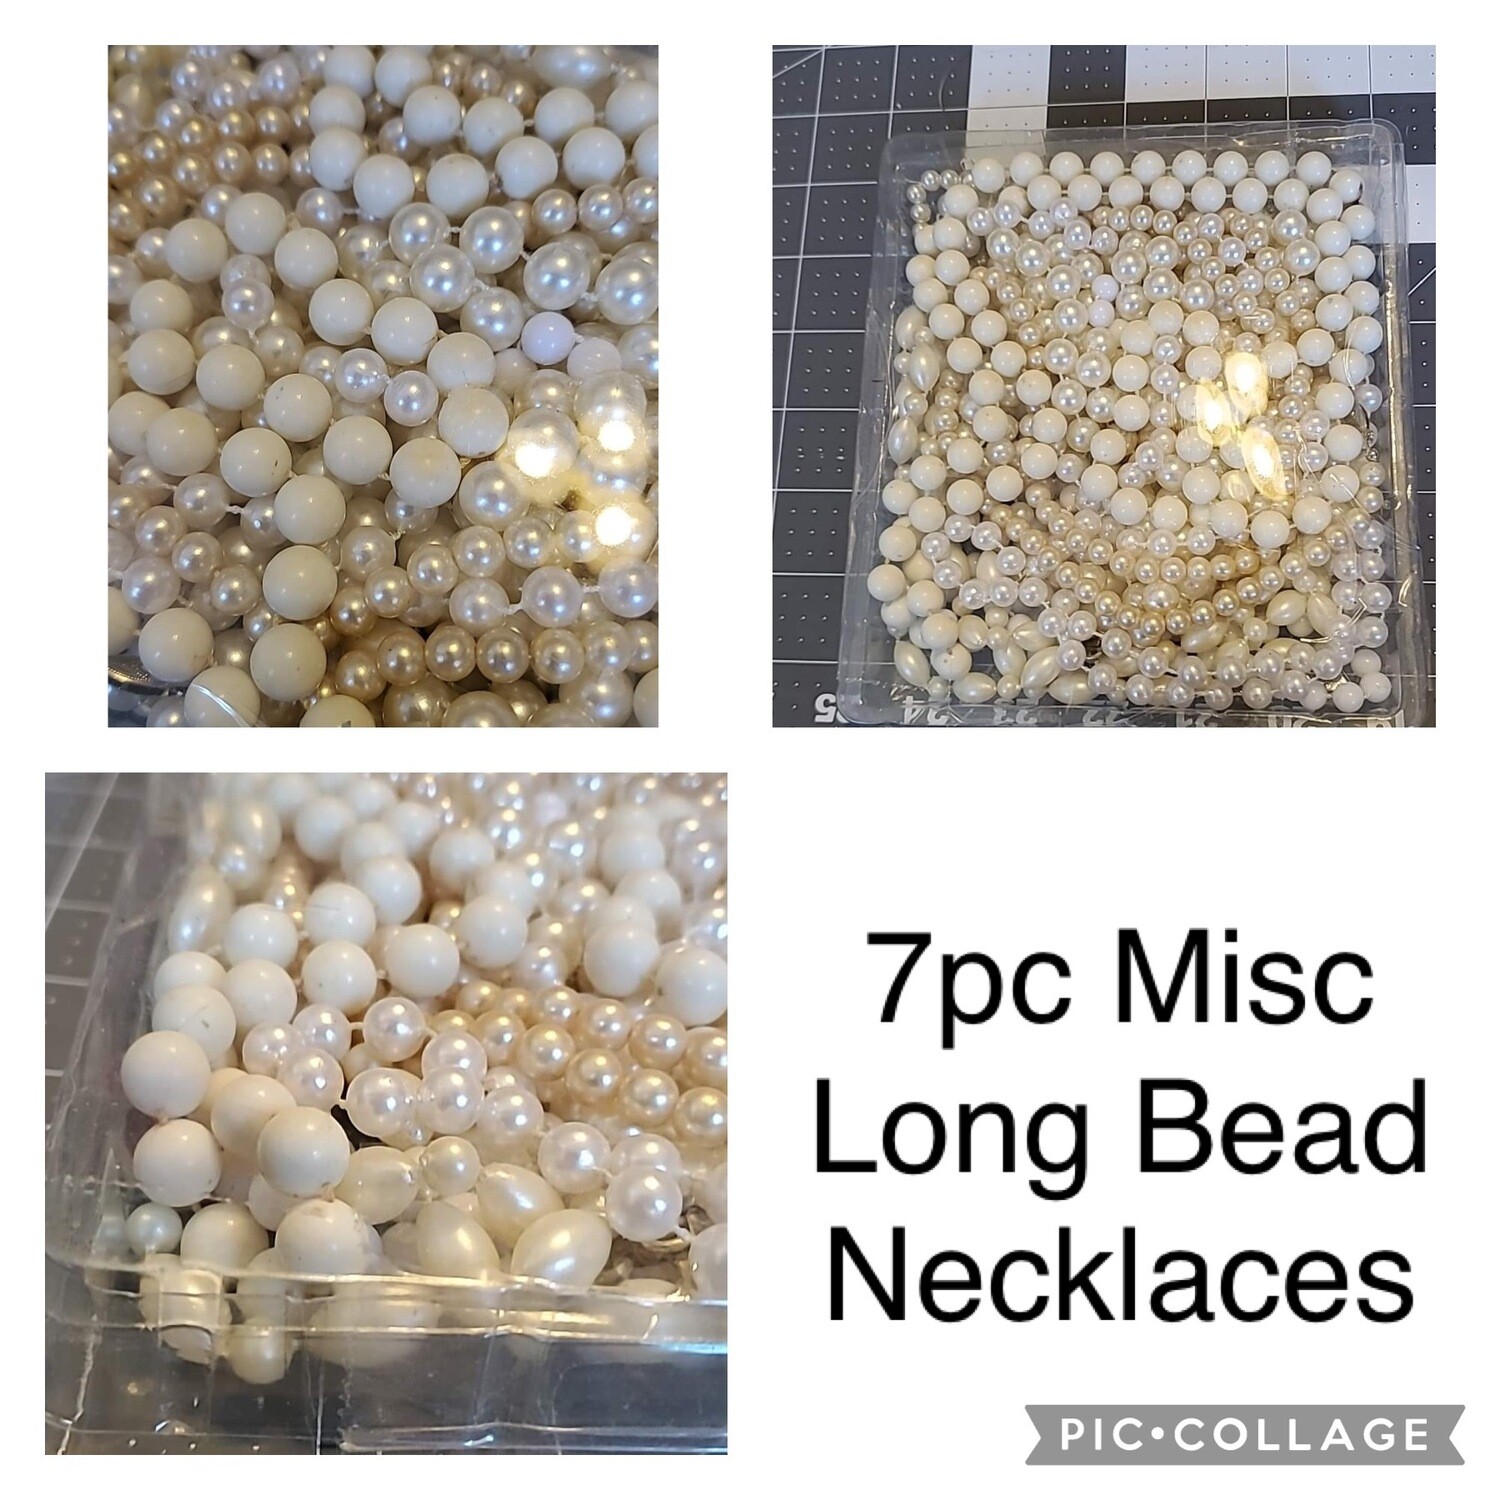 7pc Misc Long Bead